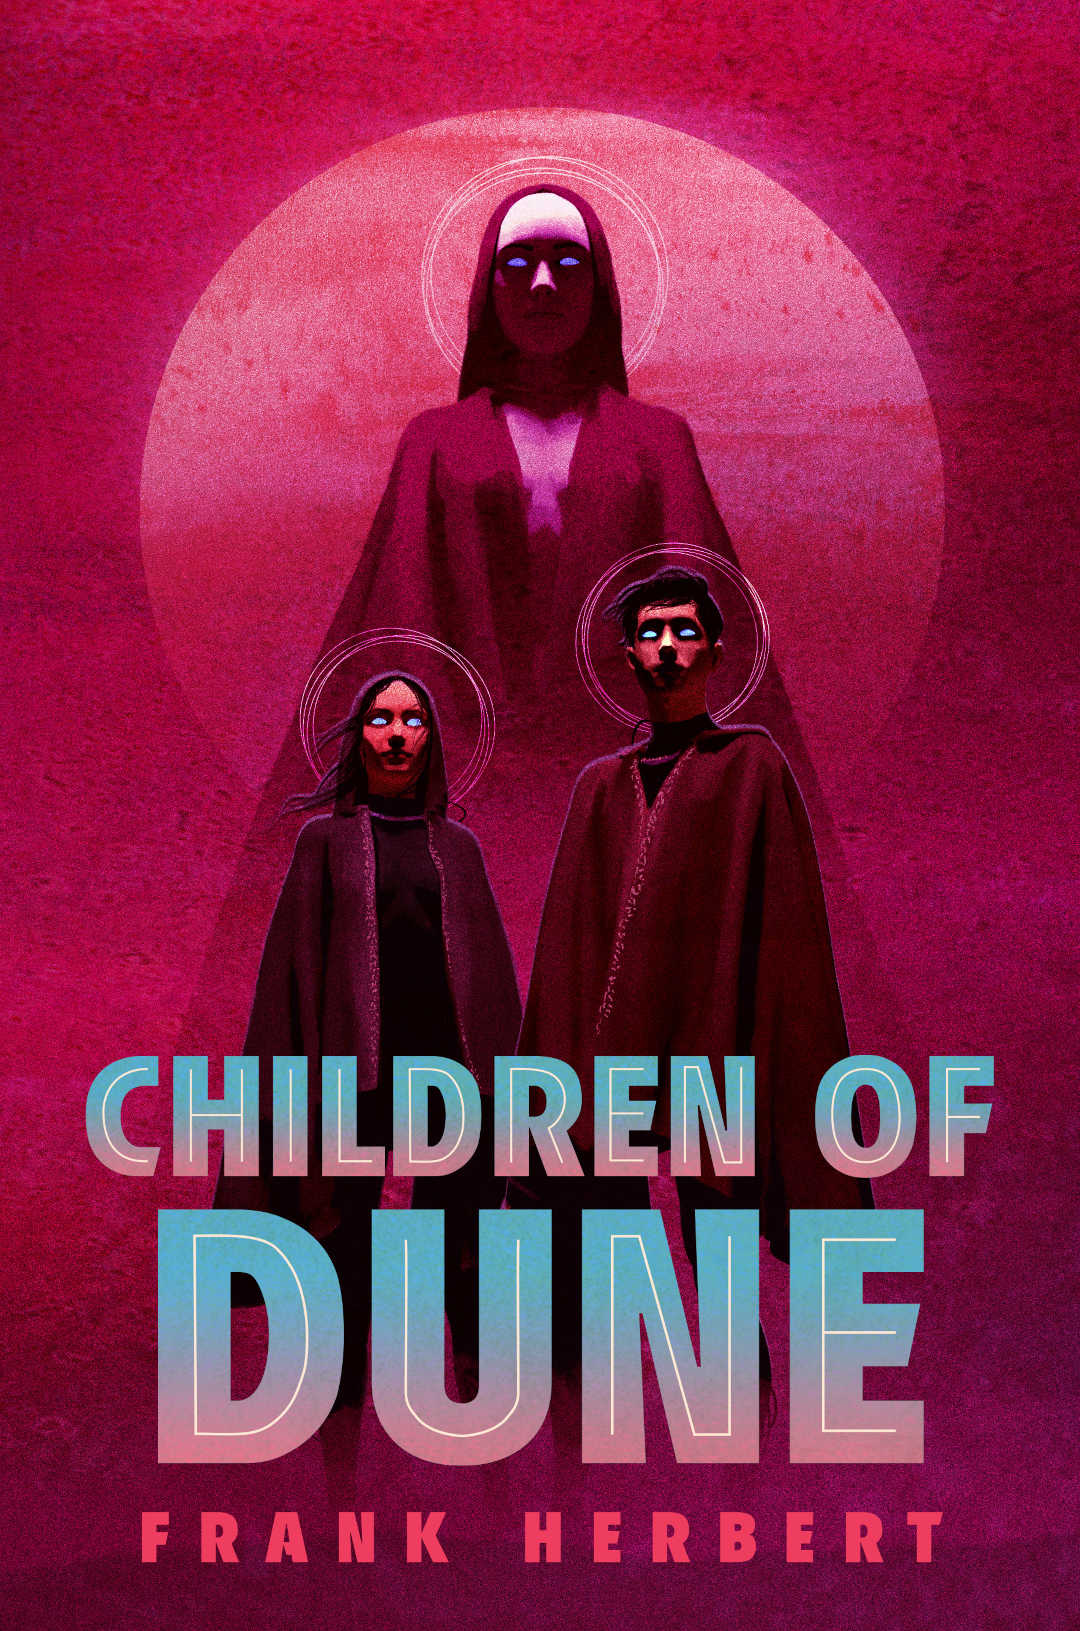 Cover of 'Children of Dune' book, written by Frank Herbert. Deluxe edition artwork by Matt Griffin.